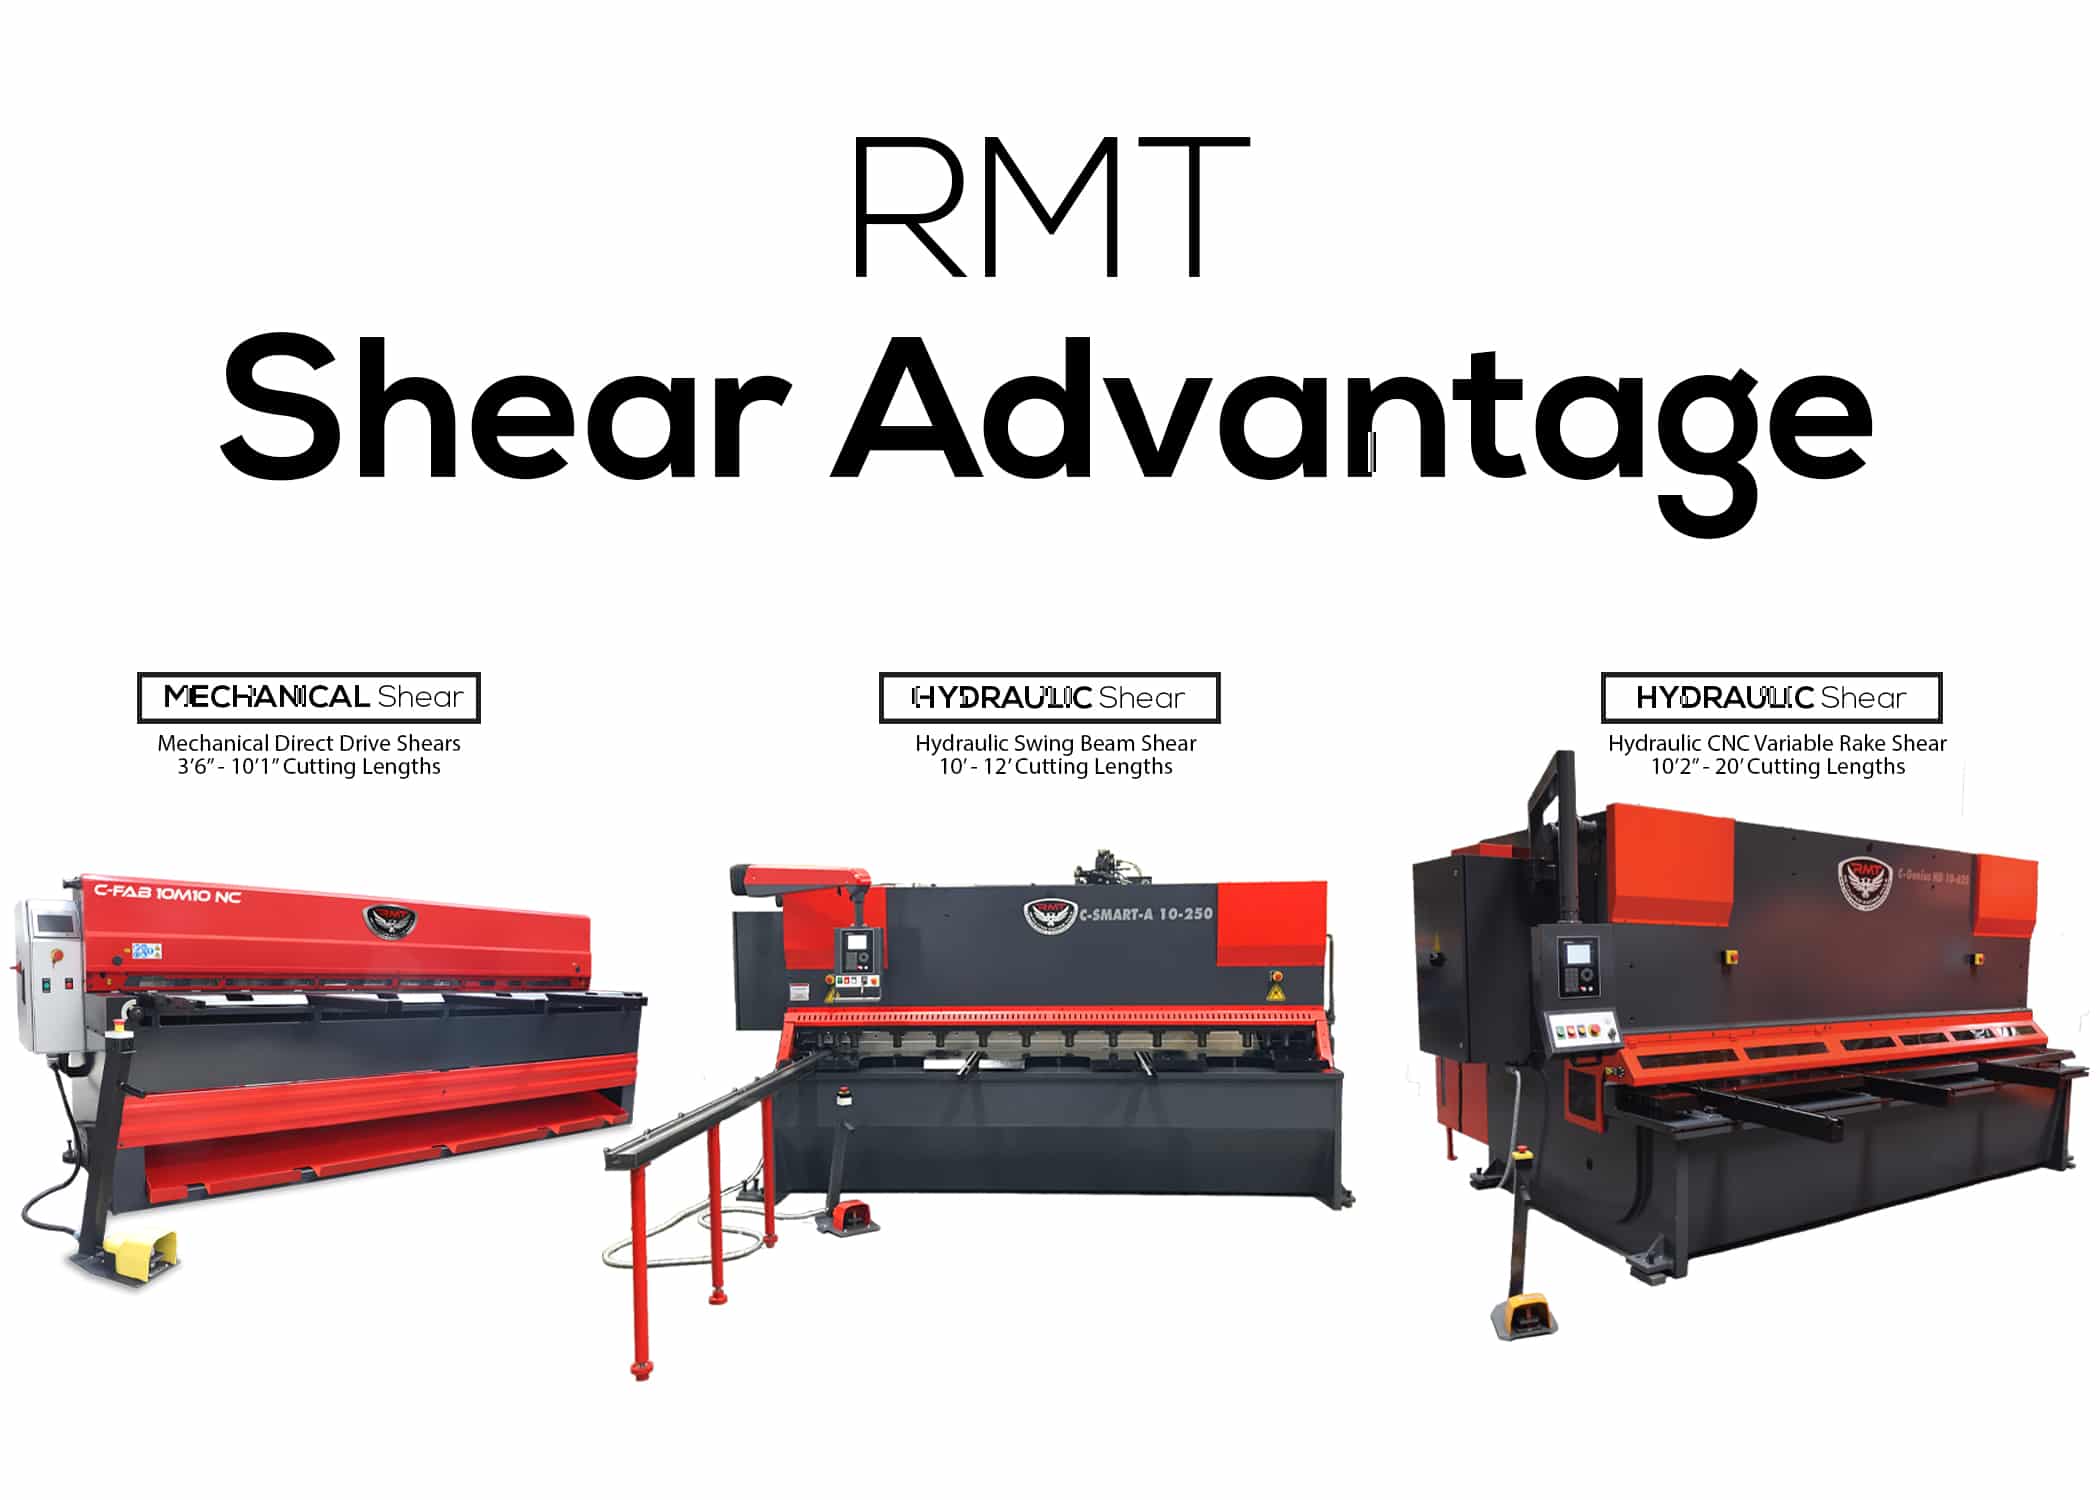 RMT Shears Advantage Featured